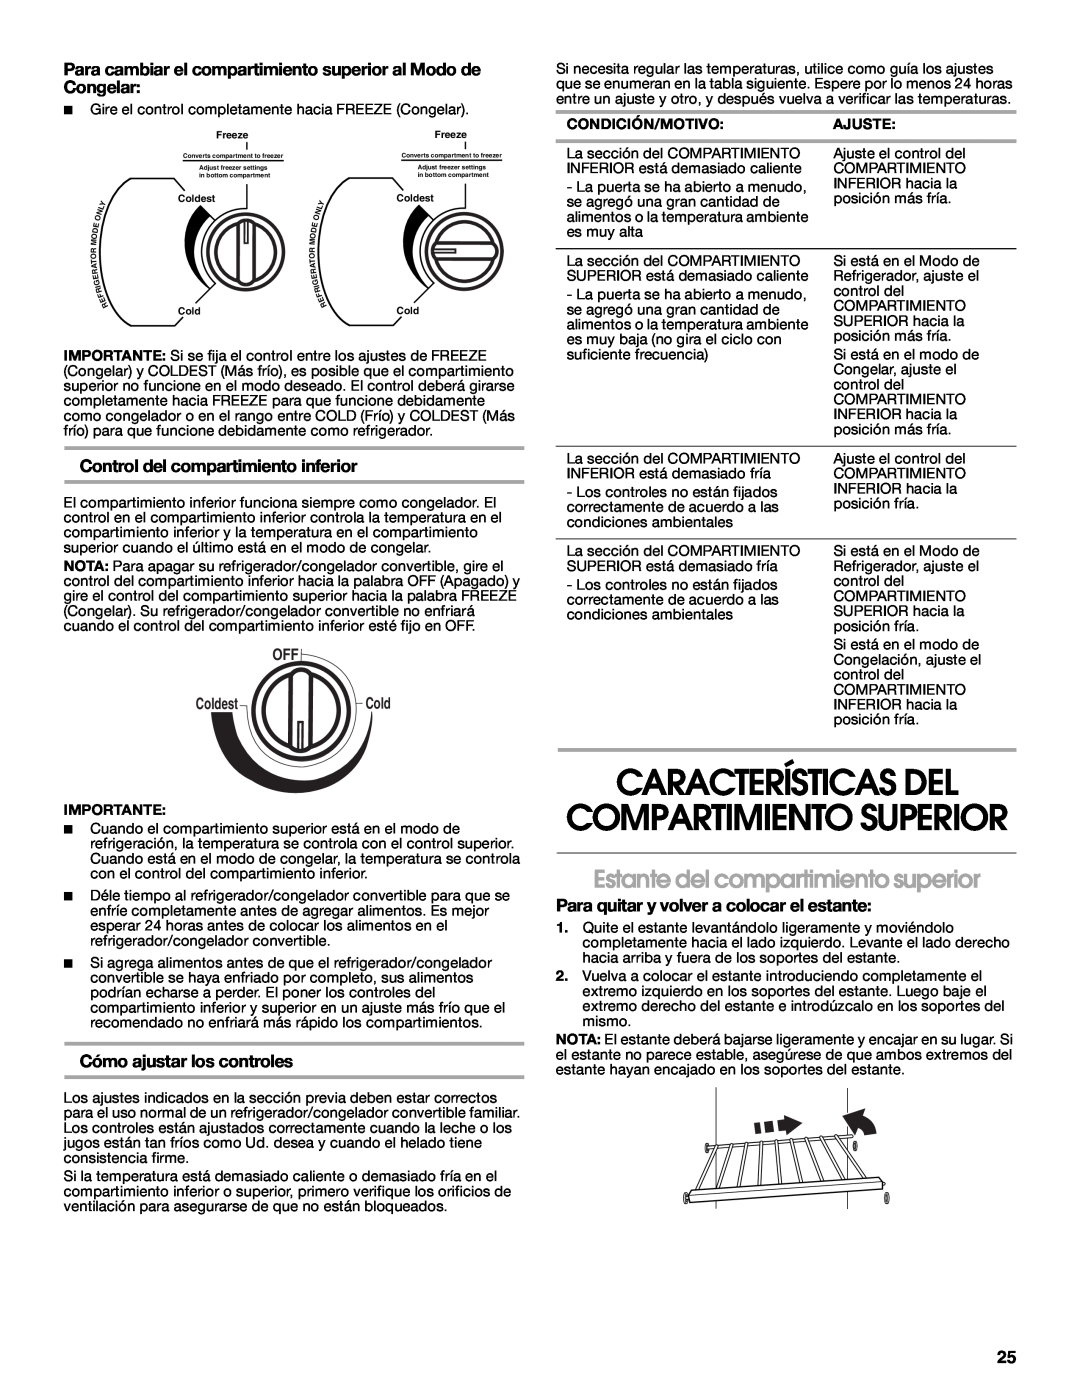 Whirlpool 2314466 manual Características Del, Compartimiento Superior, Estante del compartimiento superior, OFF ColdestCold 